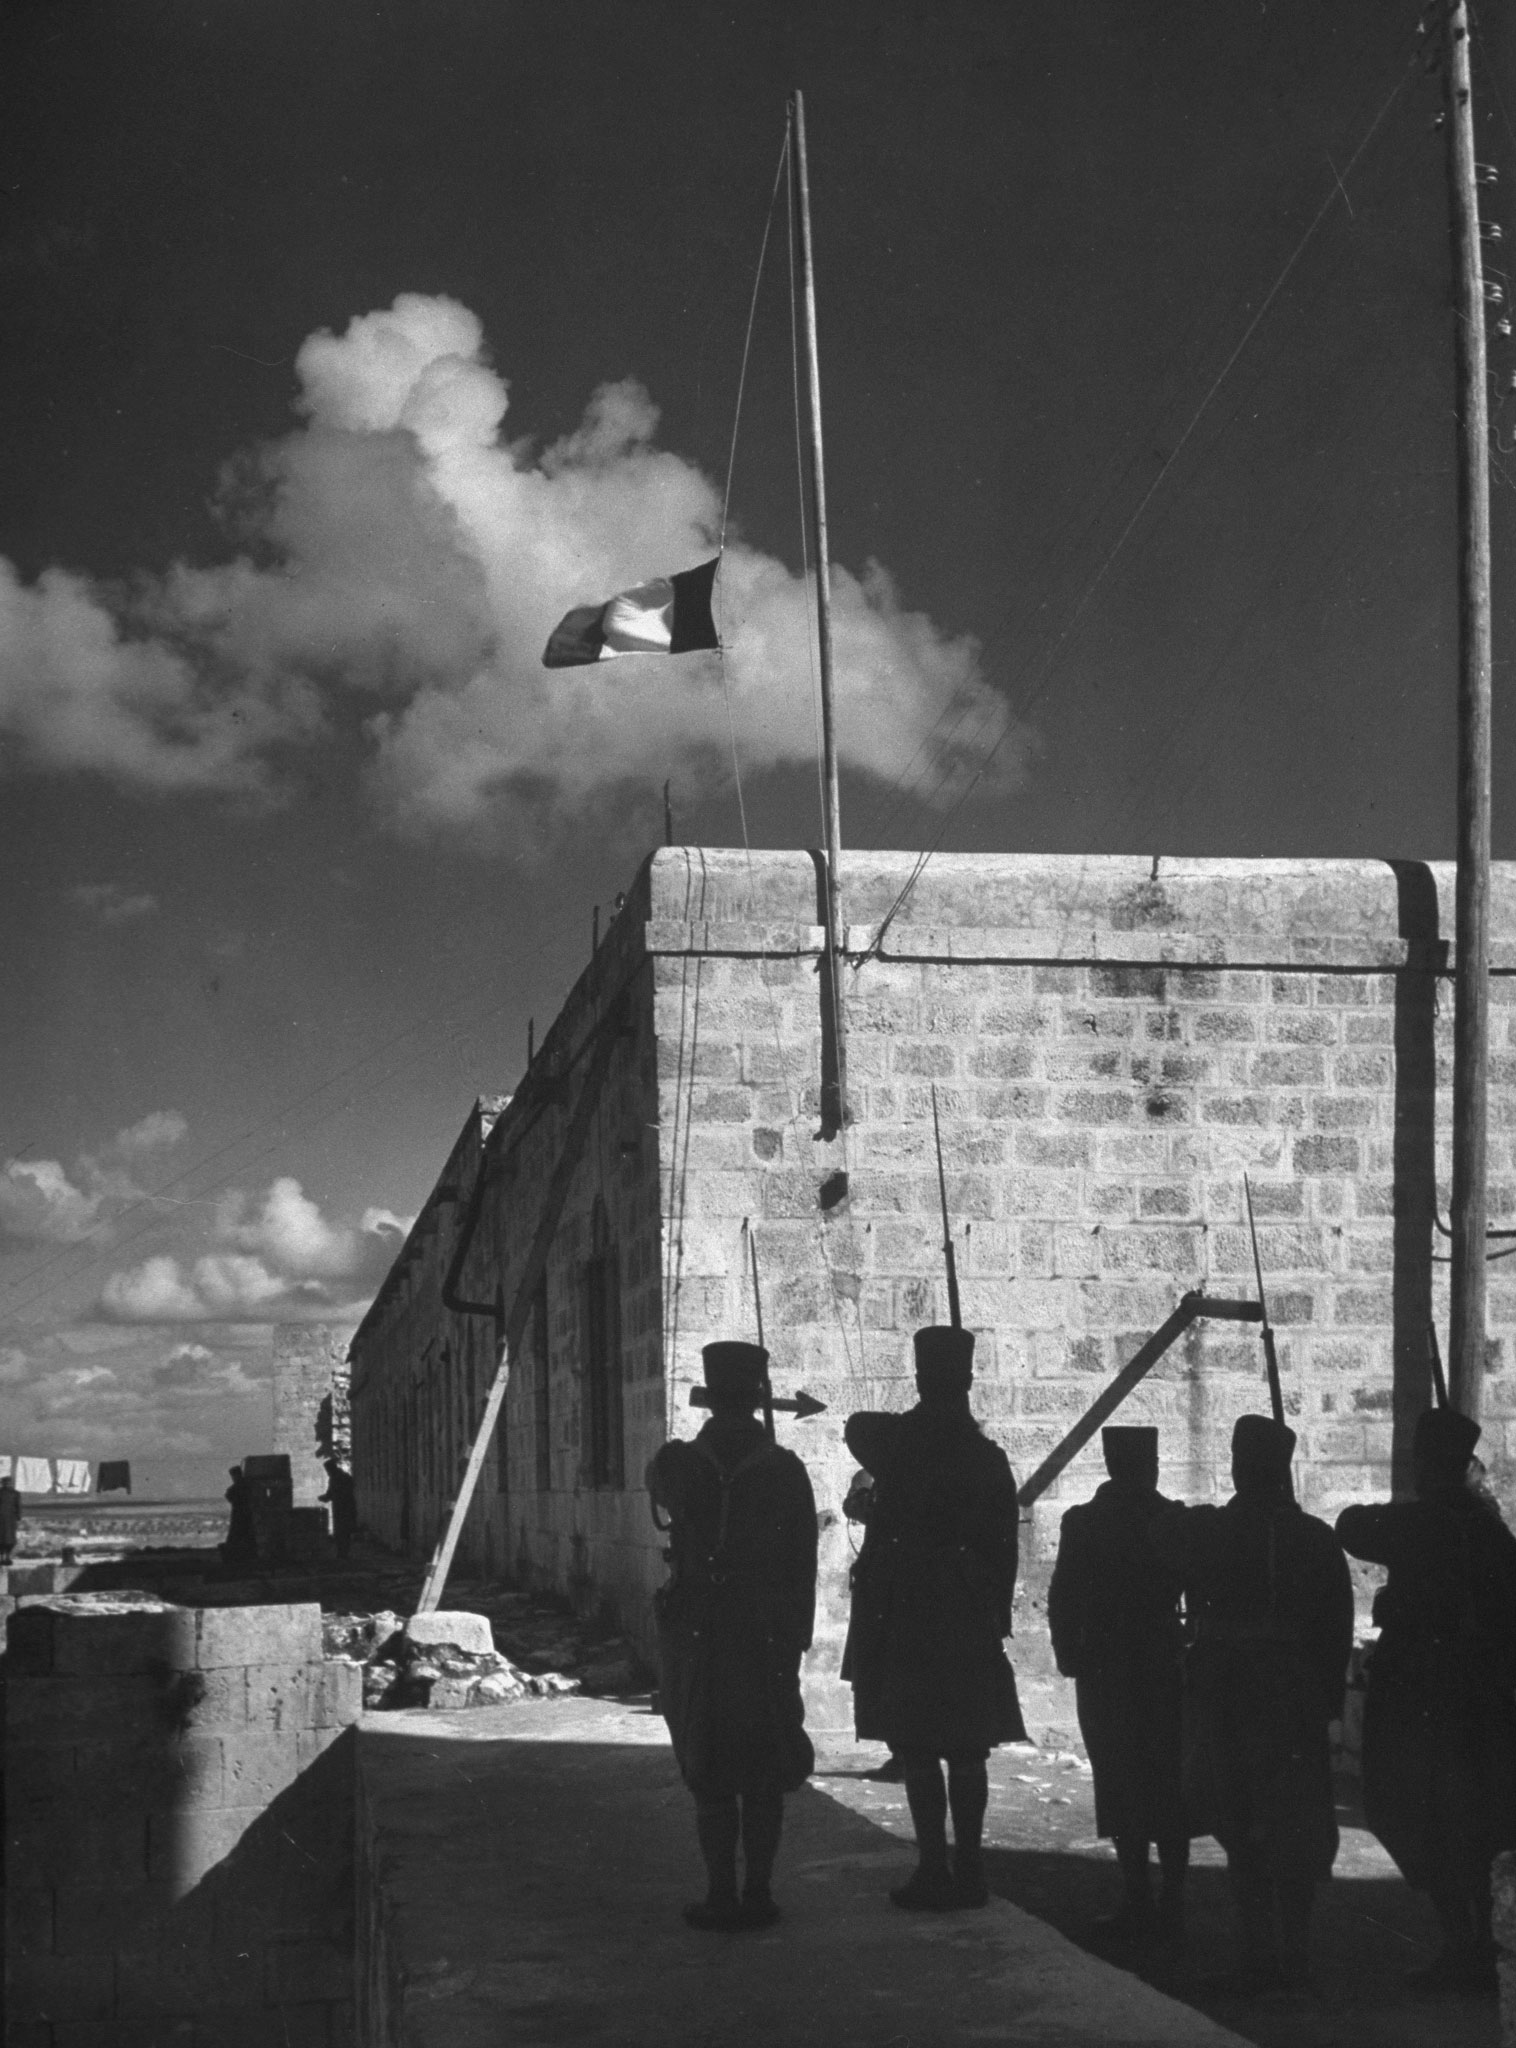 Raising the French flag at Aleppo, Syria, 1940.